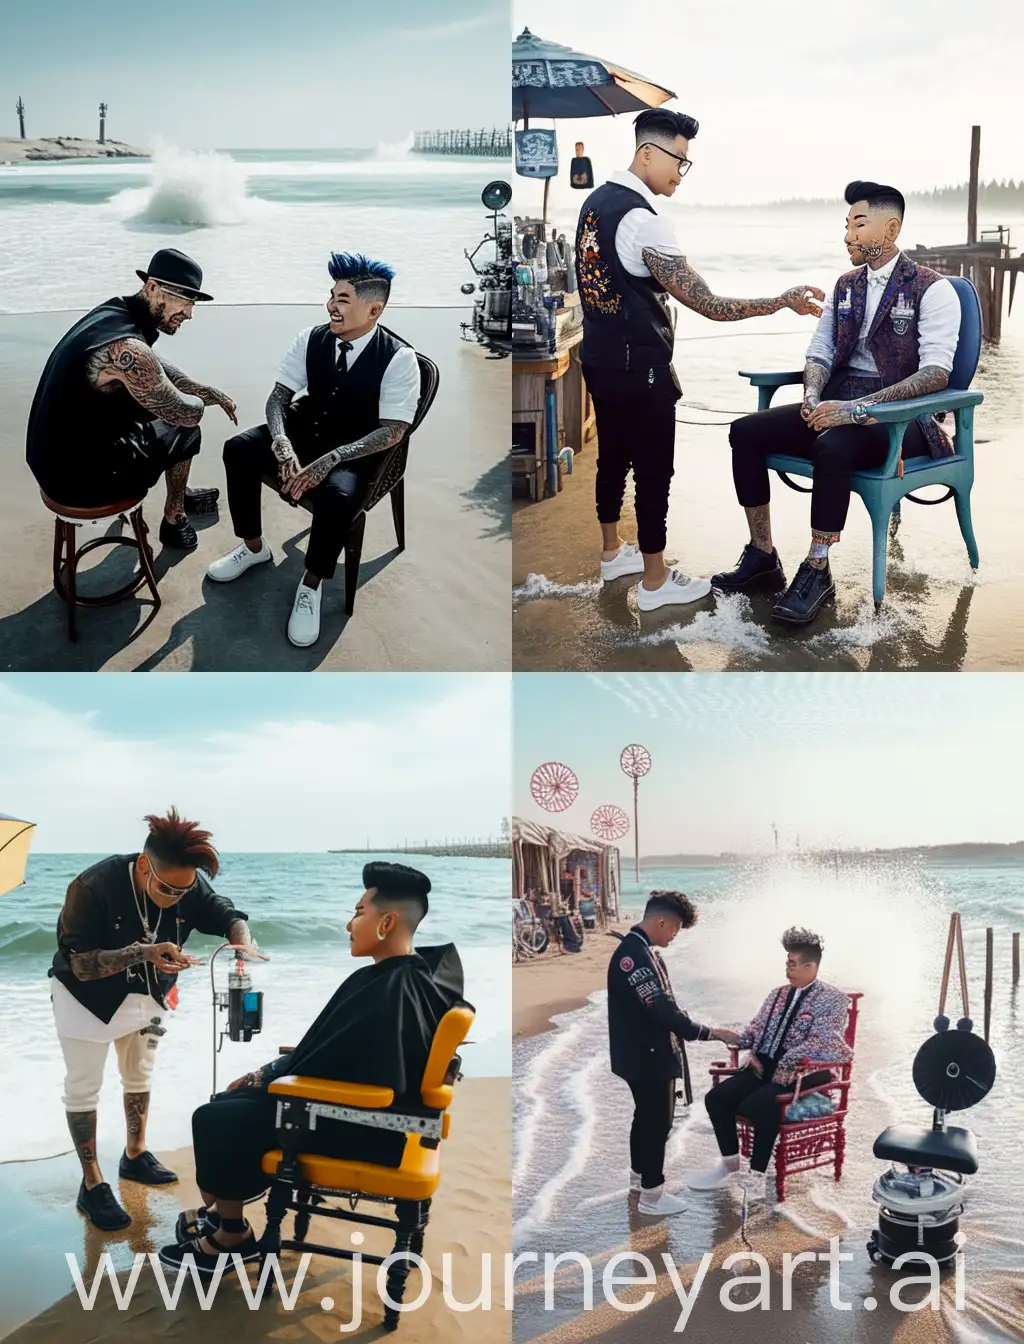 Tattooed-Korean-Barbers-Sealing-a-Deal-on-Flooded-Beach